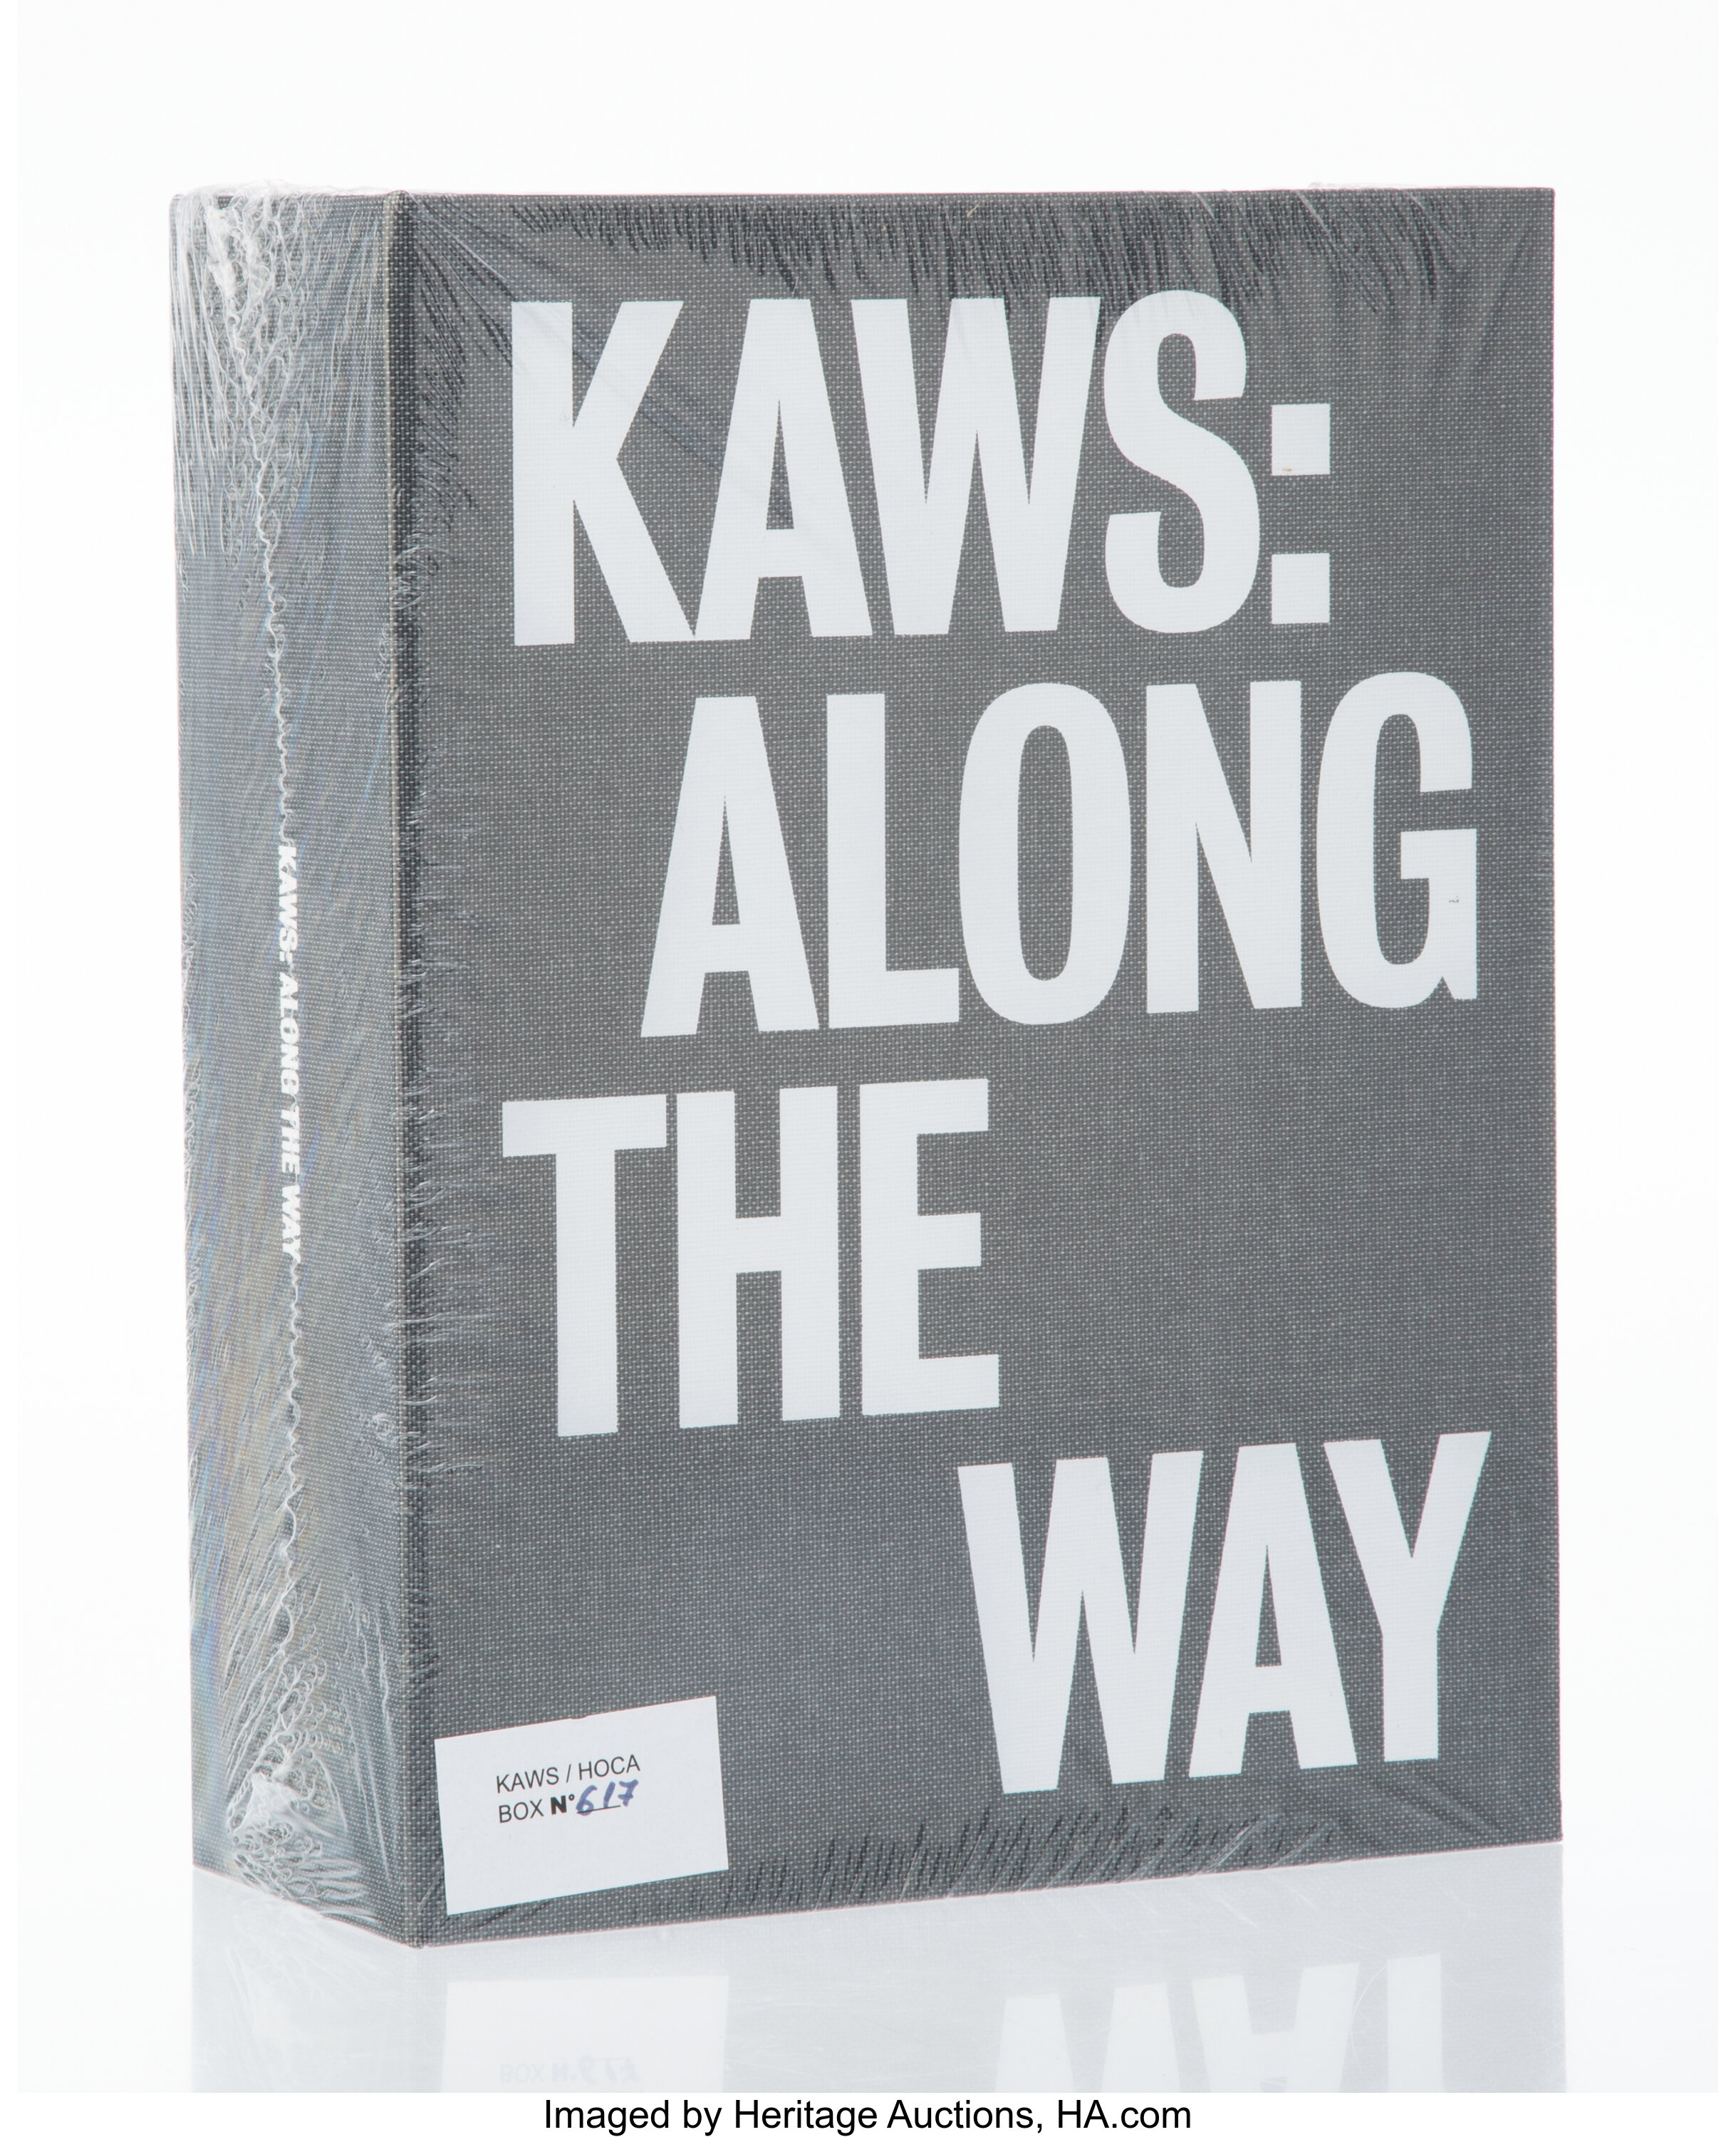 KAWS X HOCA. KAWS: Along the Way Monograph, 2020. Brochure, vellum